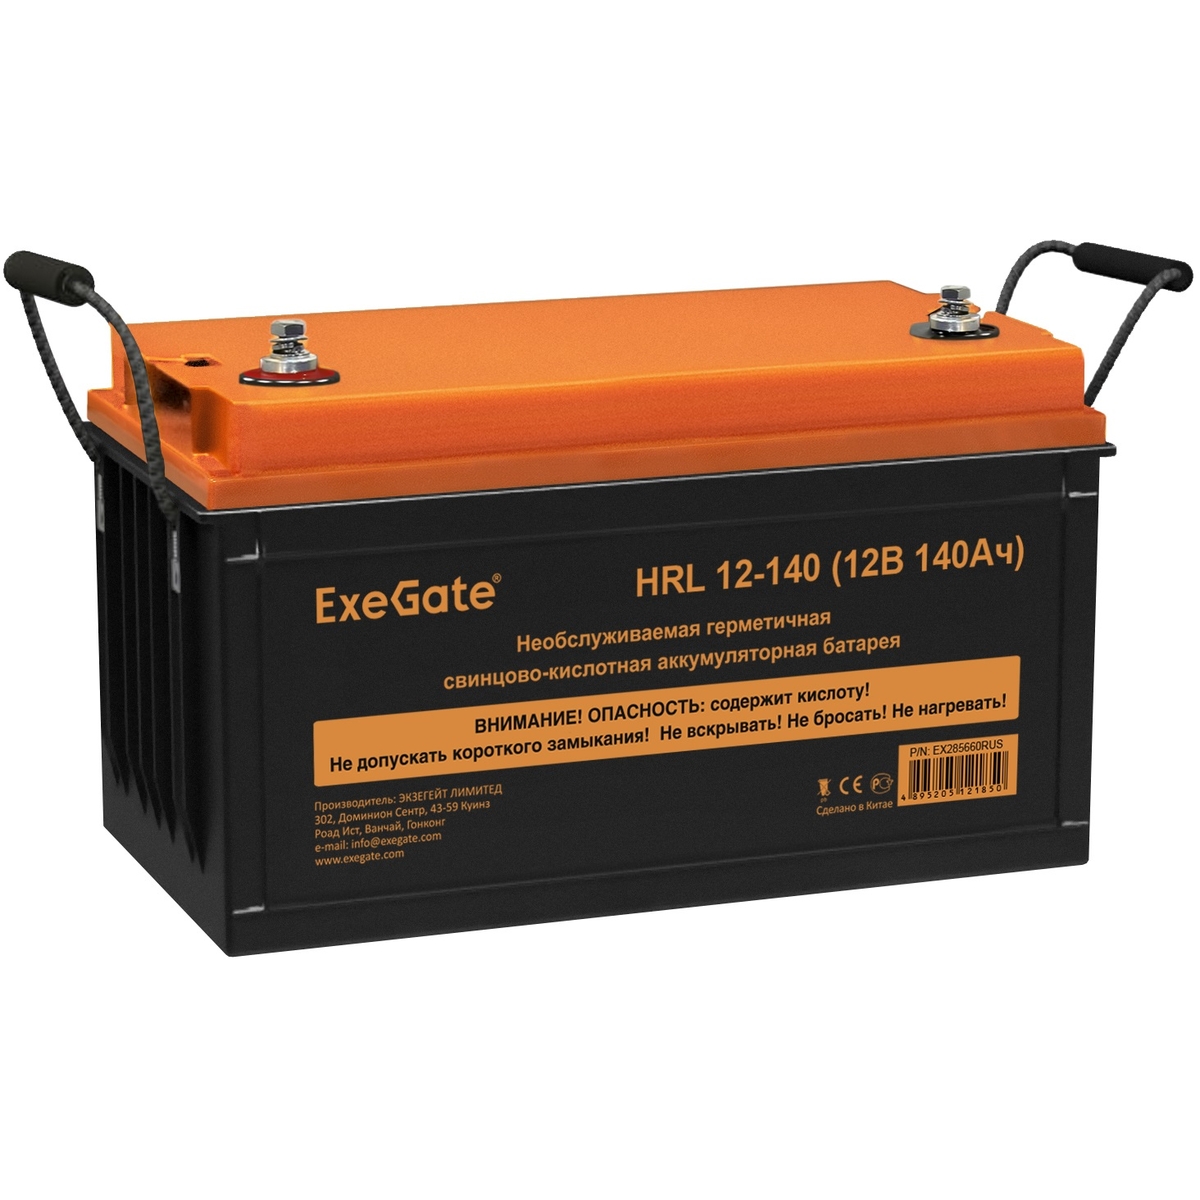 UPS set EX295995 + battery 140Ah EX285660 1 piece